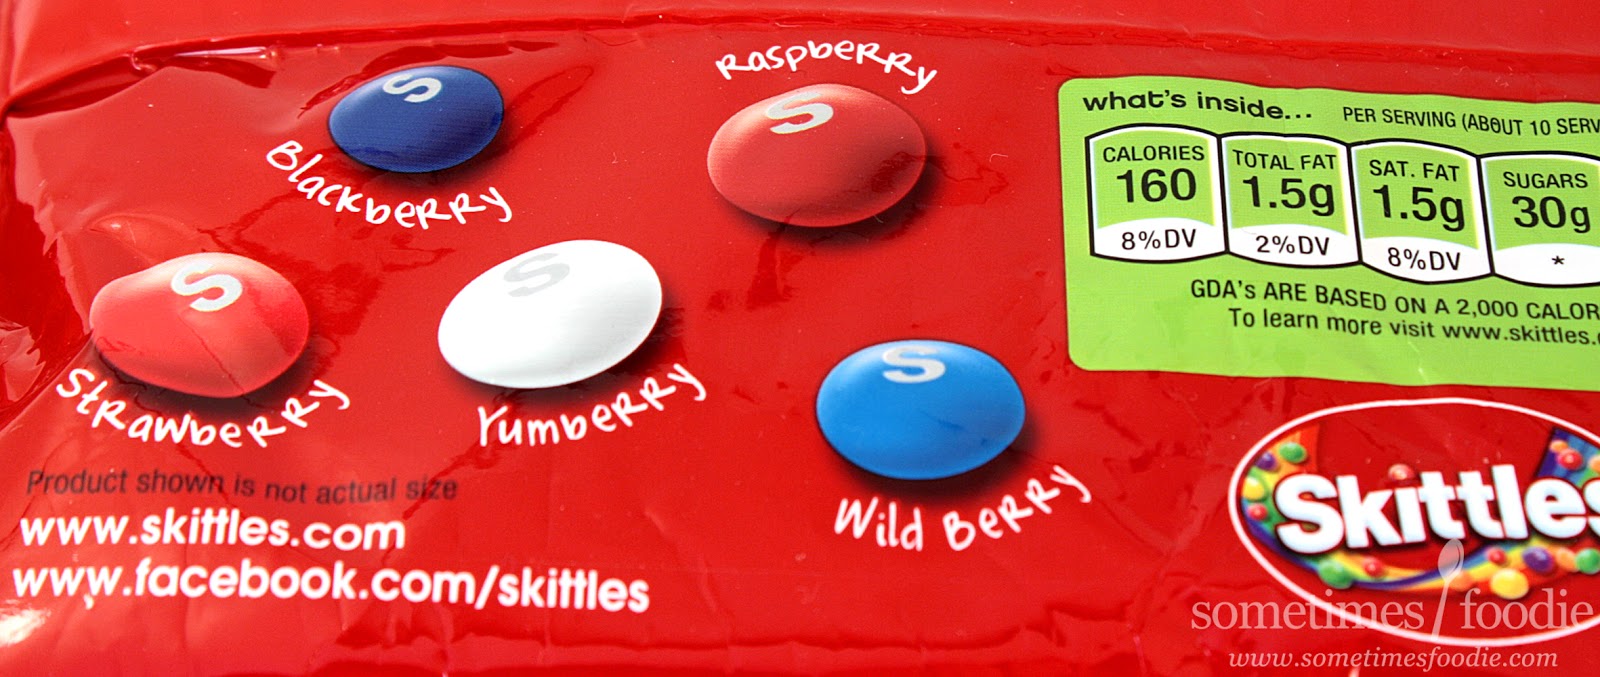 Sometimes Foodie: America Mix Skittles -